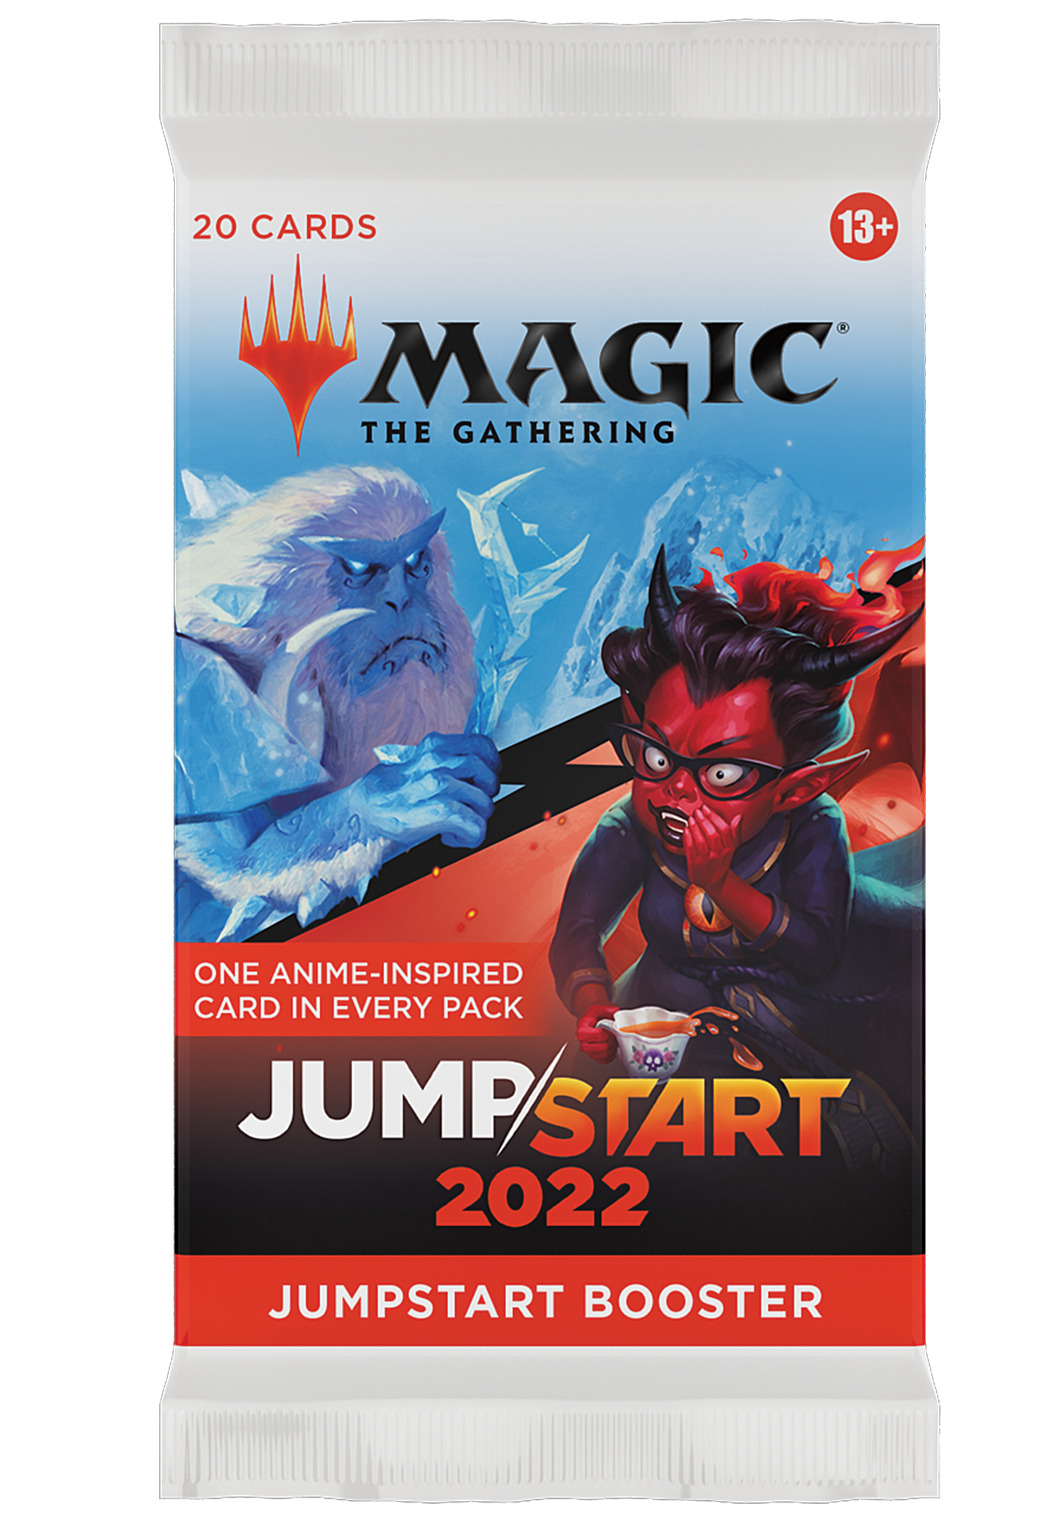 Kartová hra Magic: The Gathering - Jumpstart Booster 2022